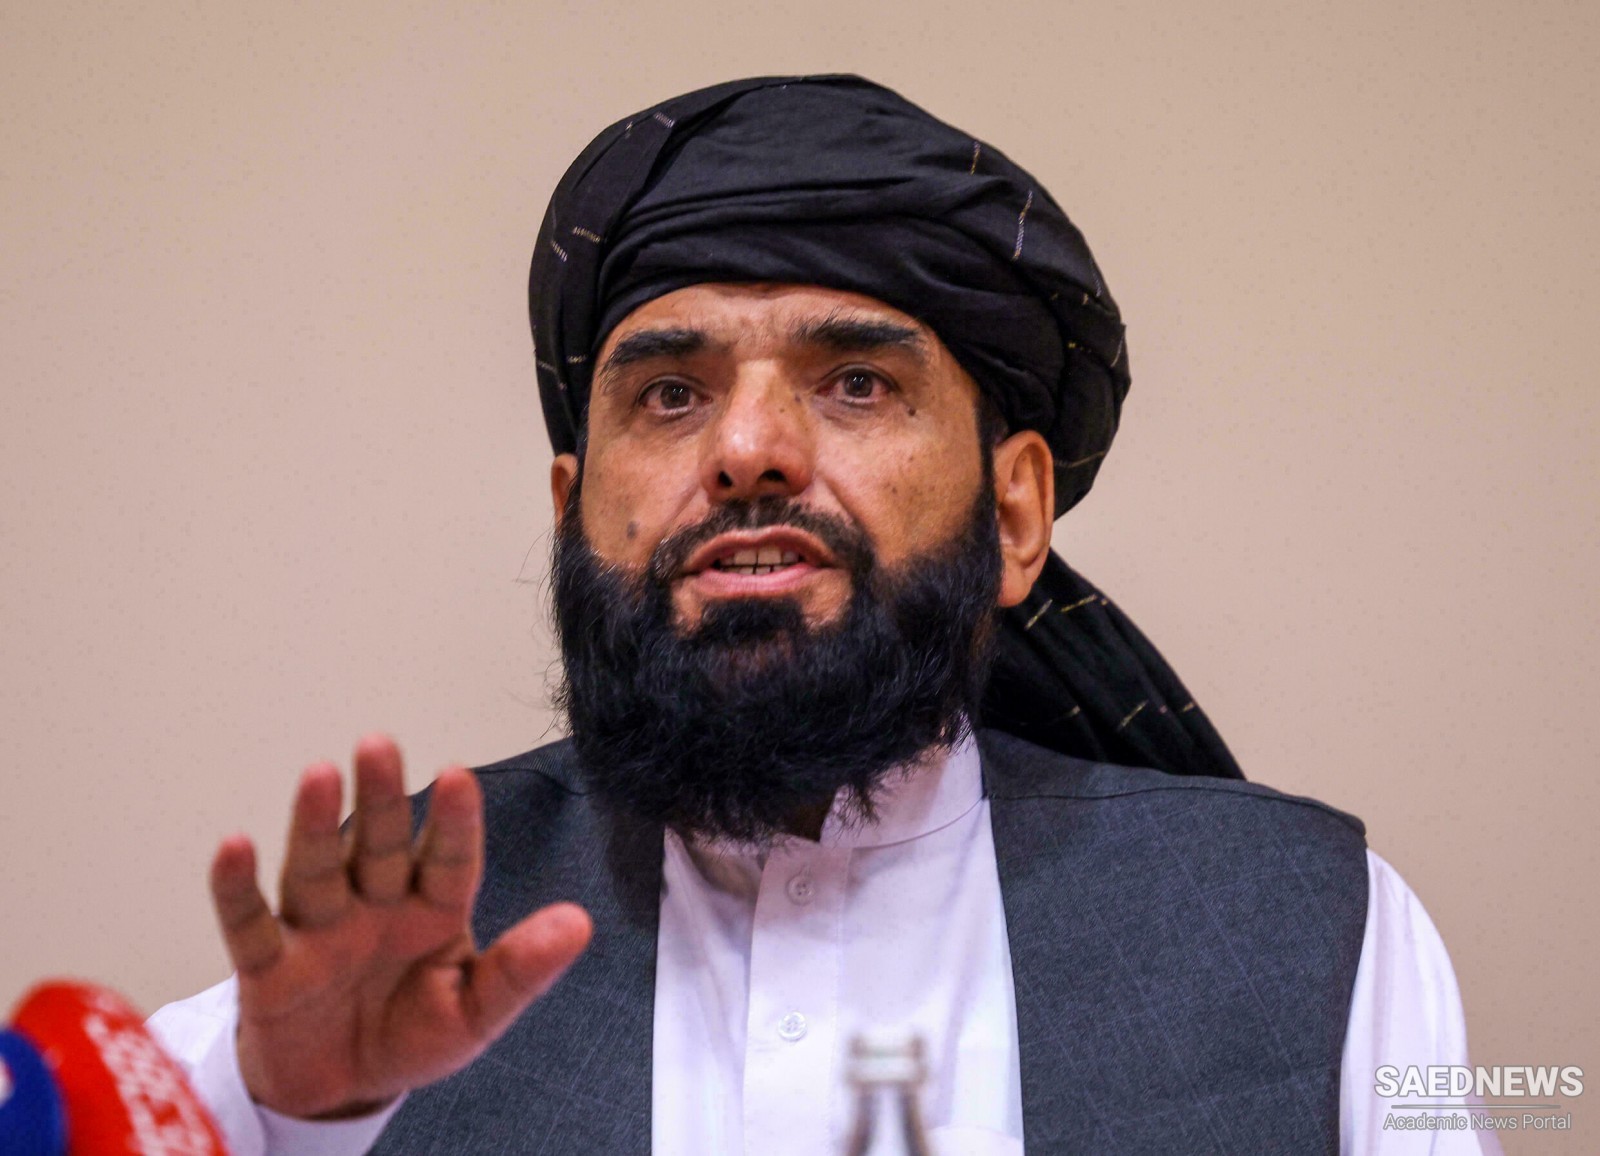 UN says Taliban asked to address GA meeting, named UN envoy